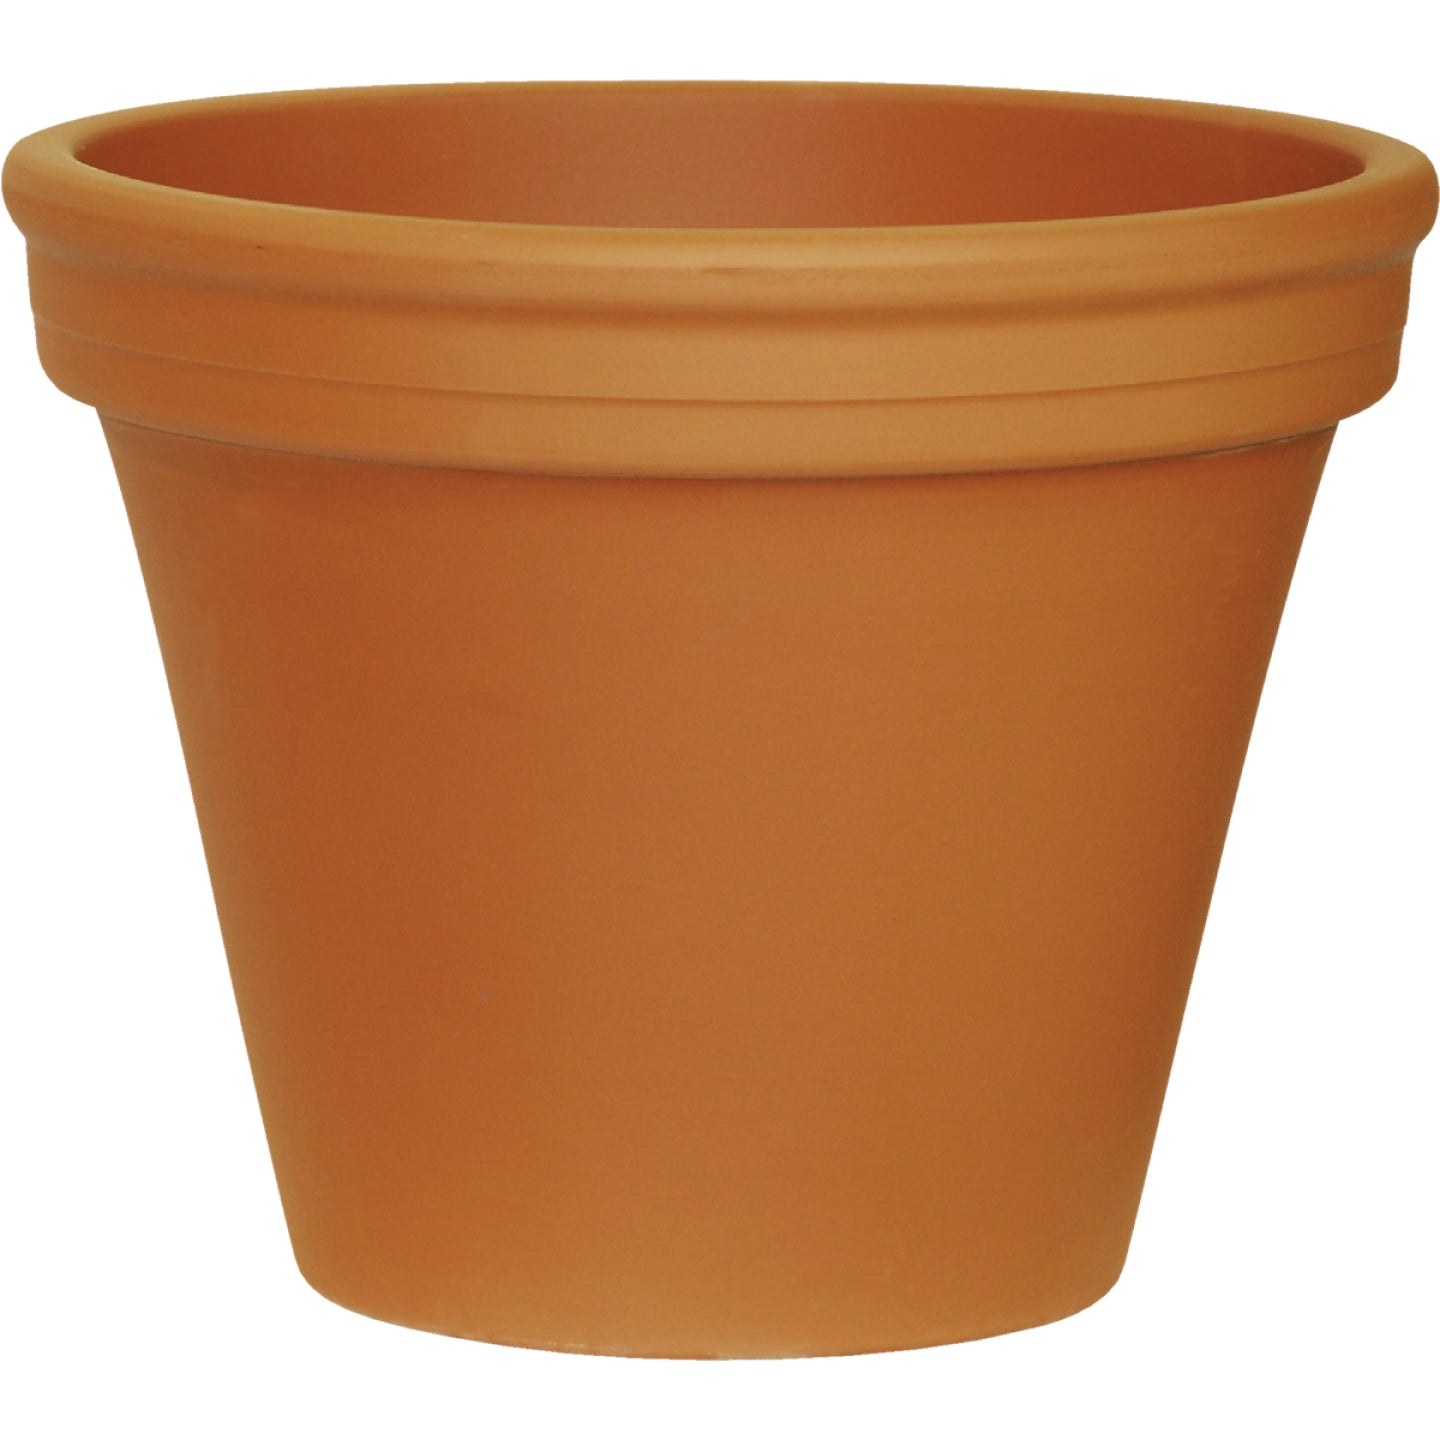 Ceramo, Ceramo 8-3/4 In. H. x 10-1/4 In. Dia. Terracotta Clay Standard Flower Pot